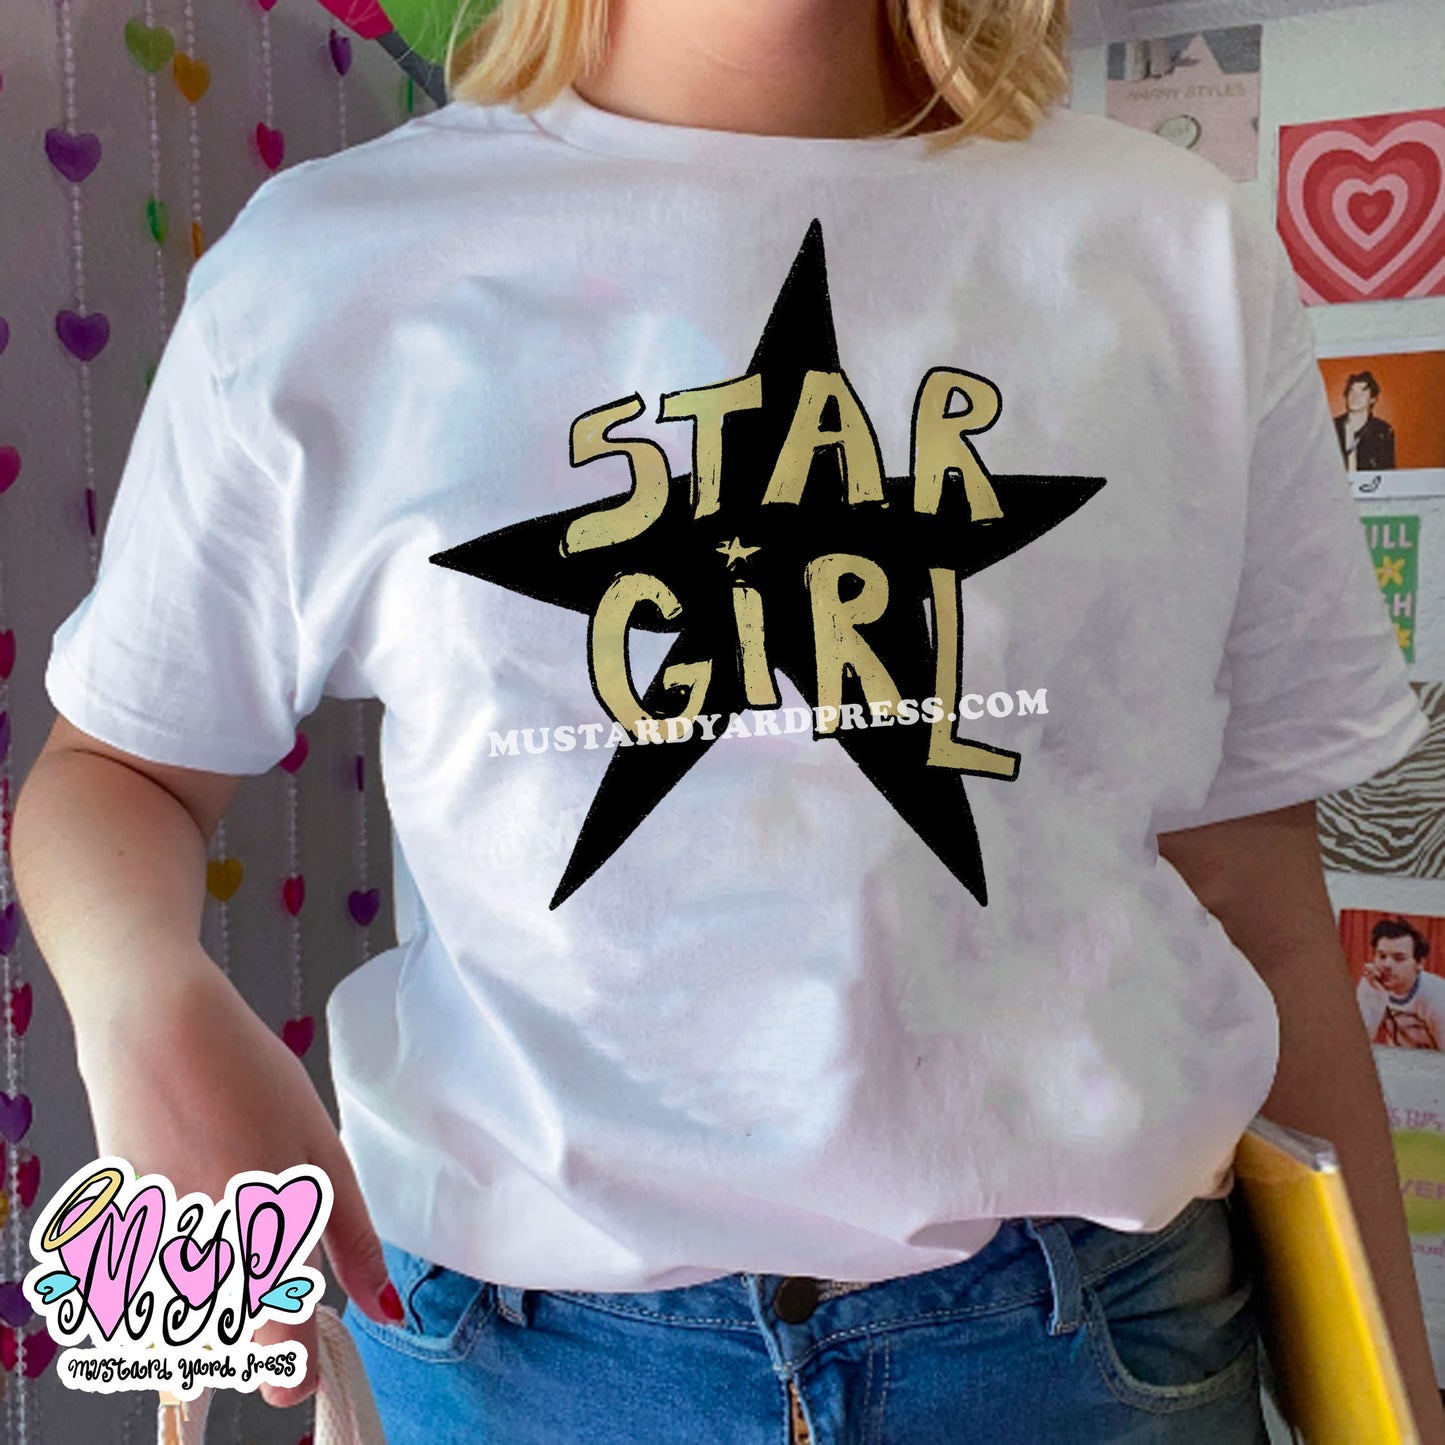 star girl t-shirt